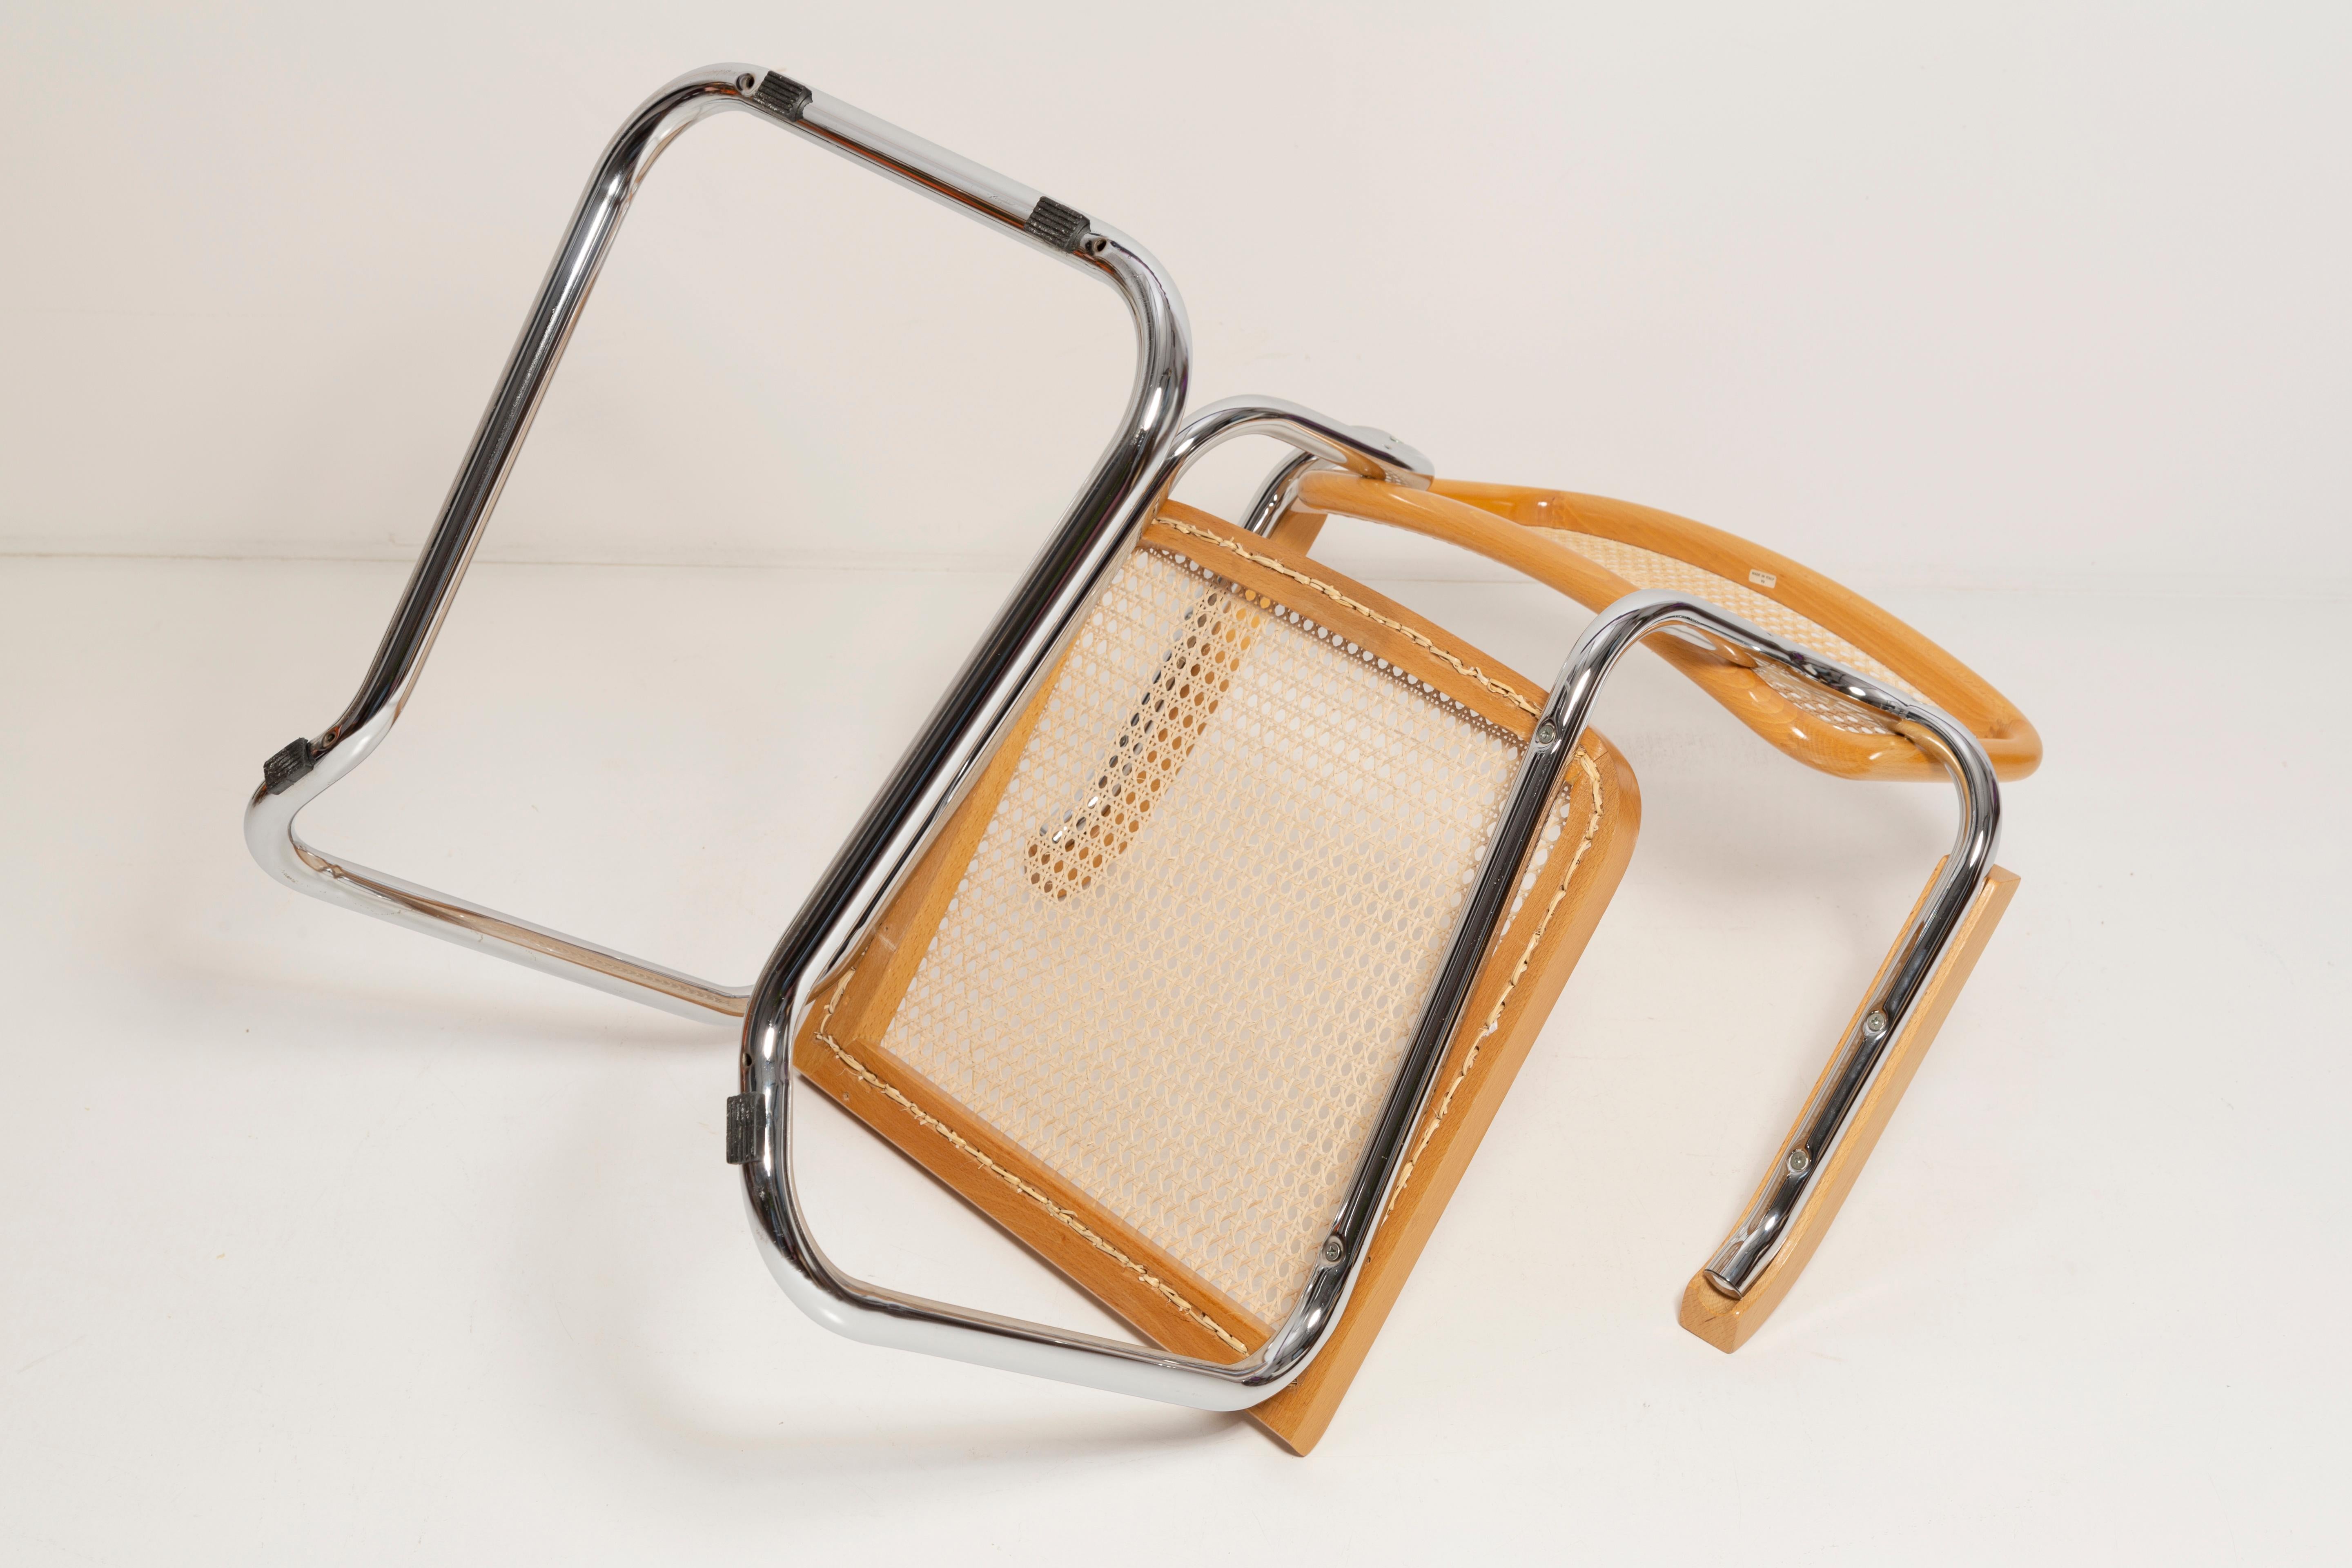 Midcentury Cesca Rattan Chair, Marcel Breuer, Italy, 1960s For Sale 1